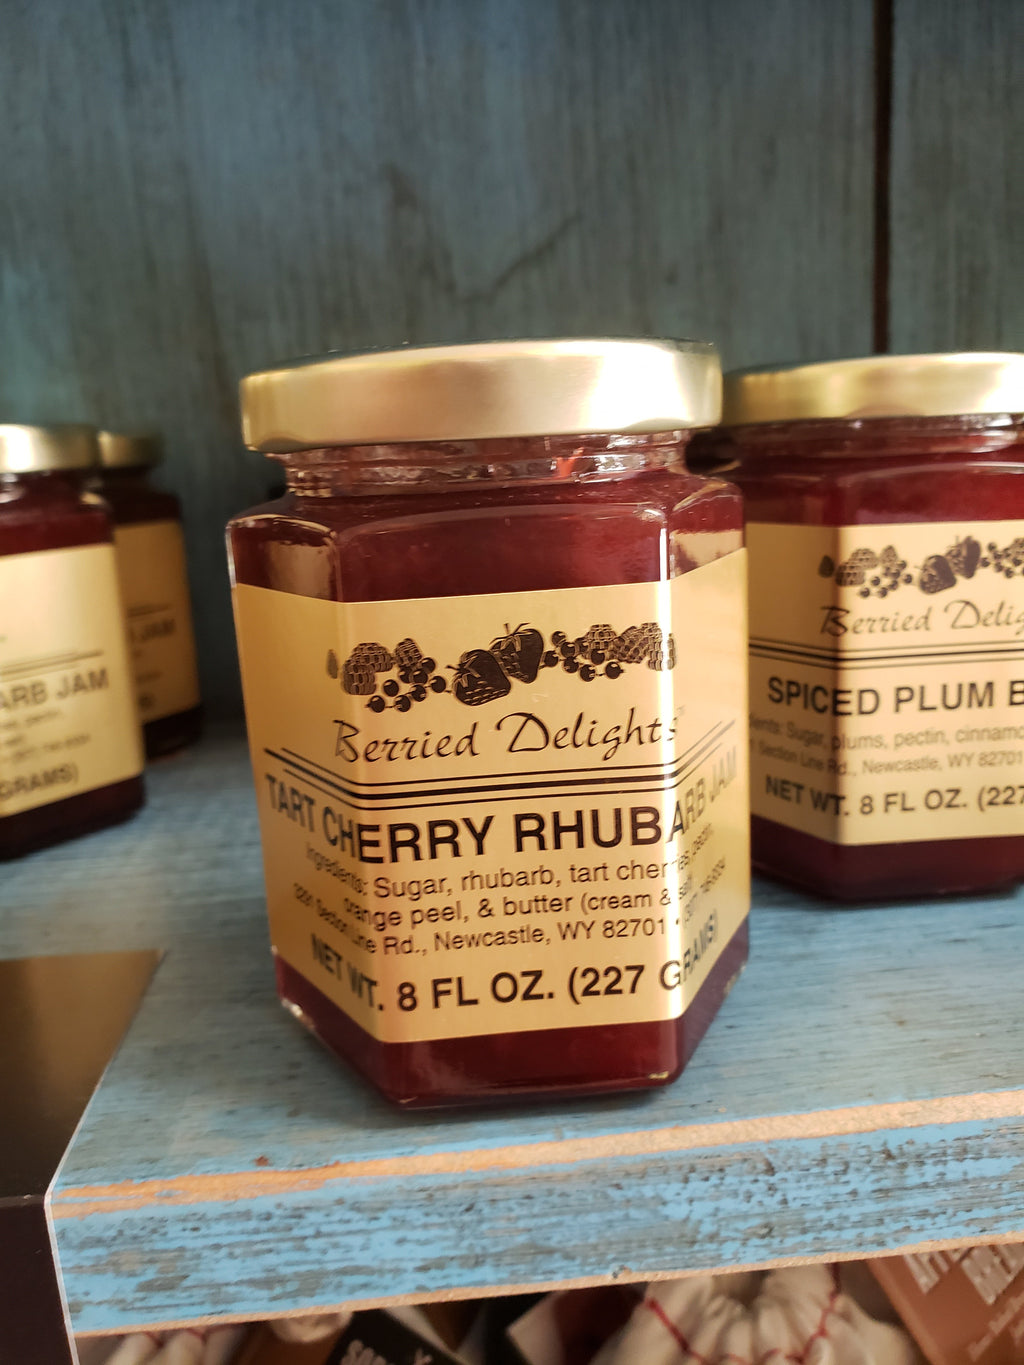 BERRIED DELIGHTS: Tart Cherry Rhubarb Jam